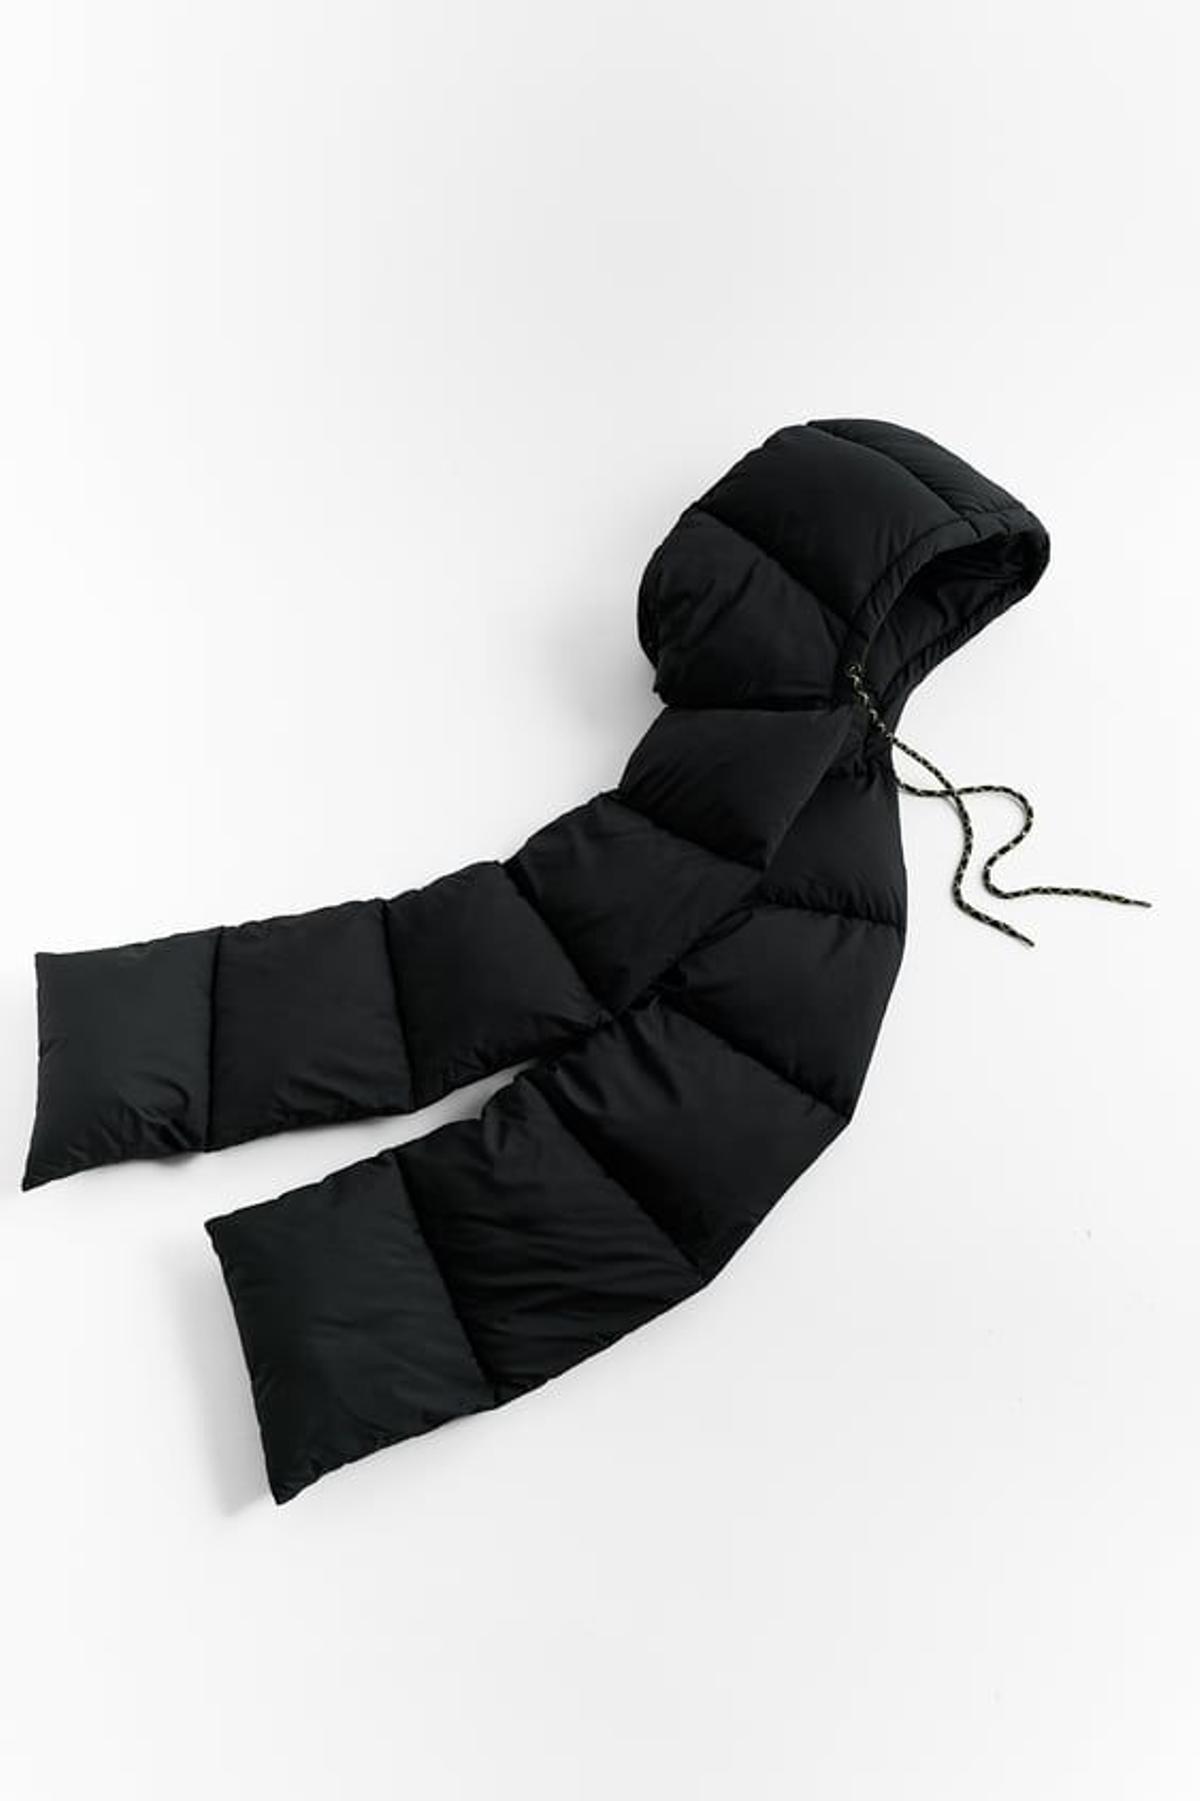 Bufanda con capucha acolchada, de Zara (12,99 euros)